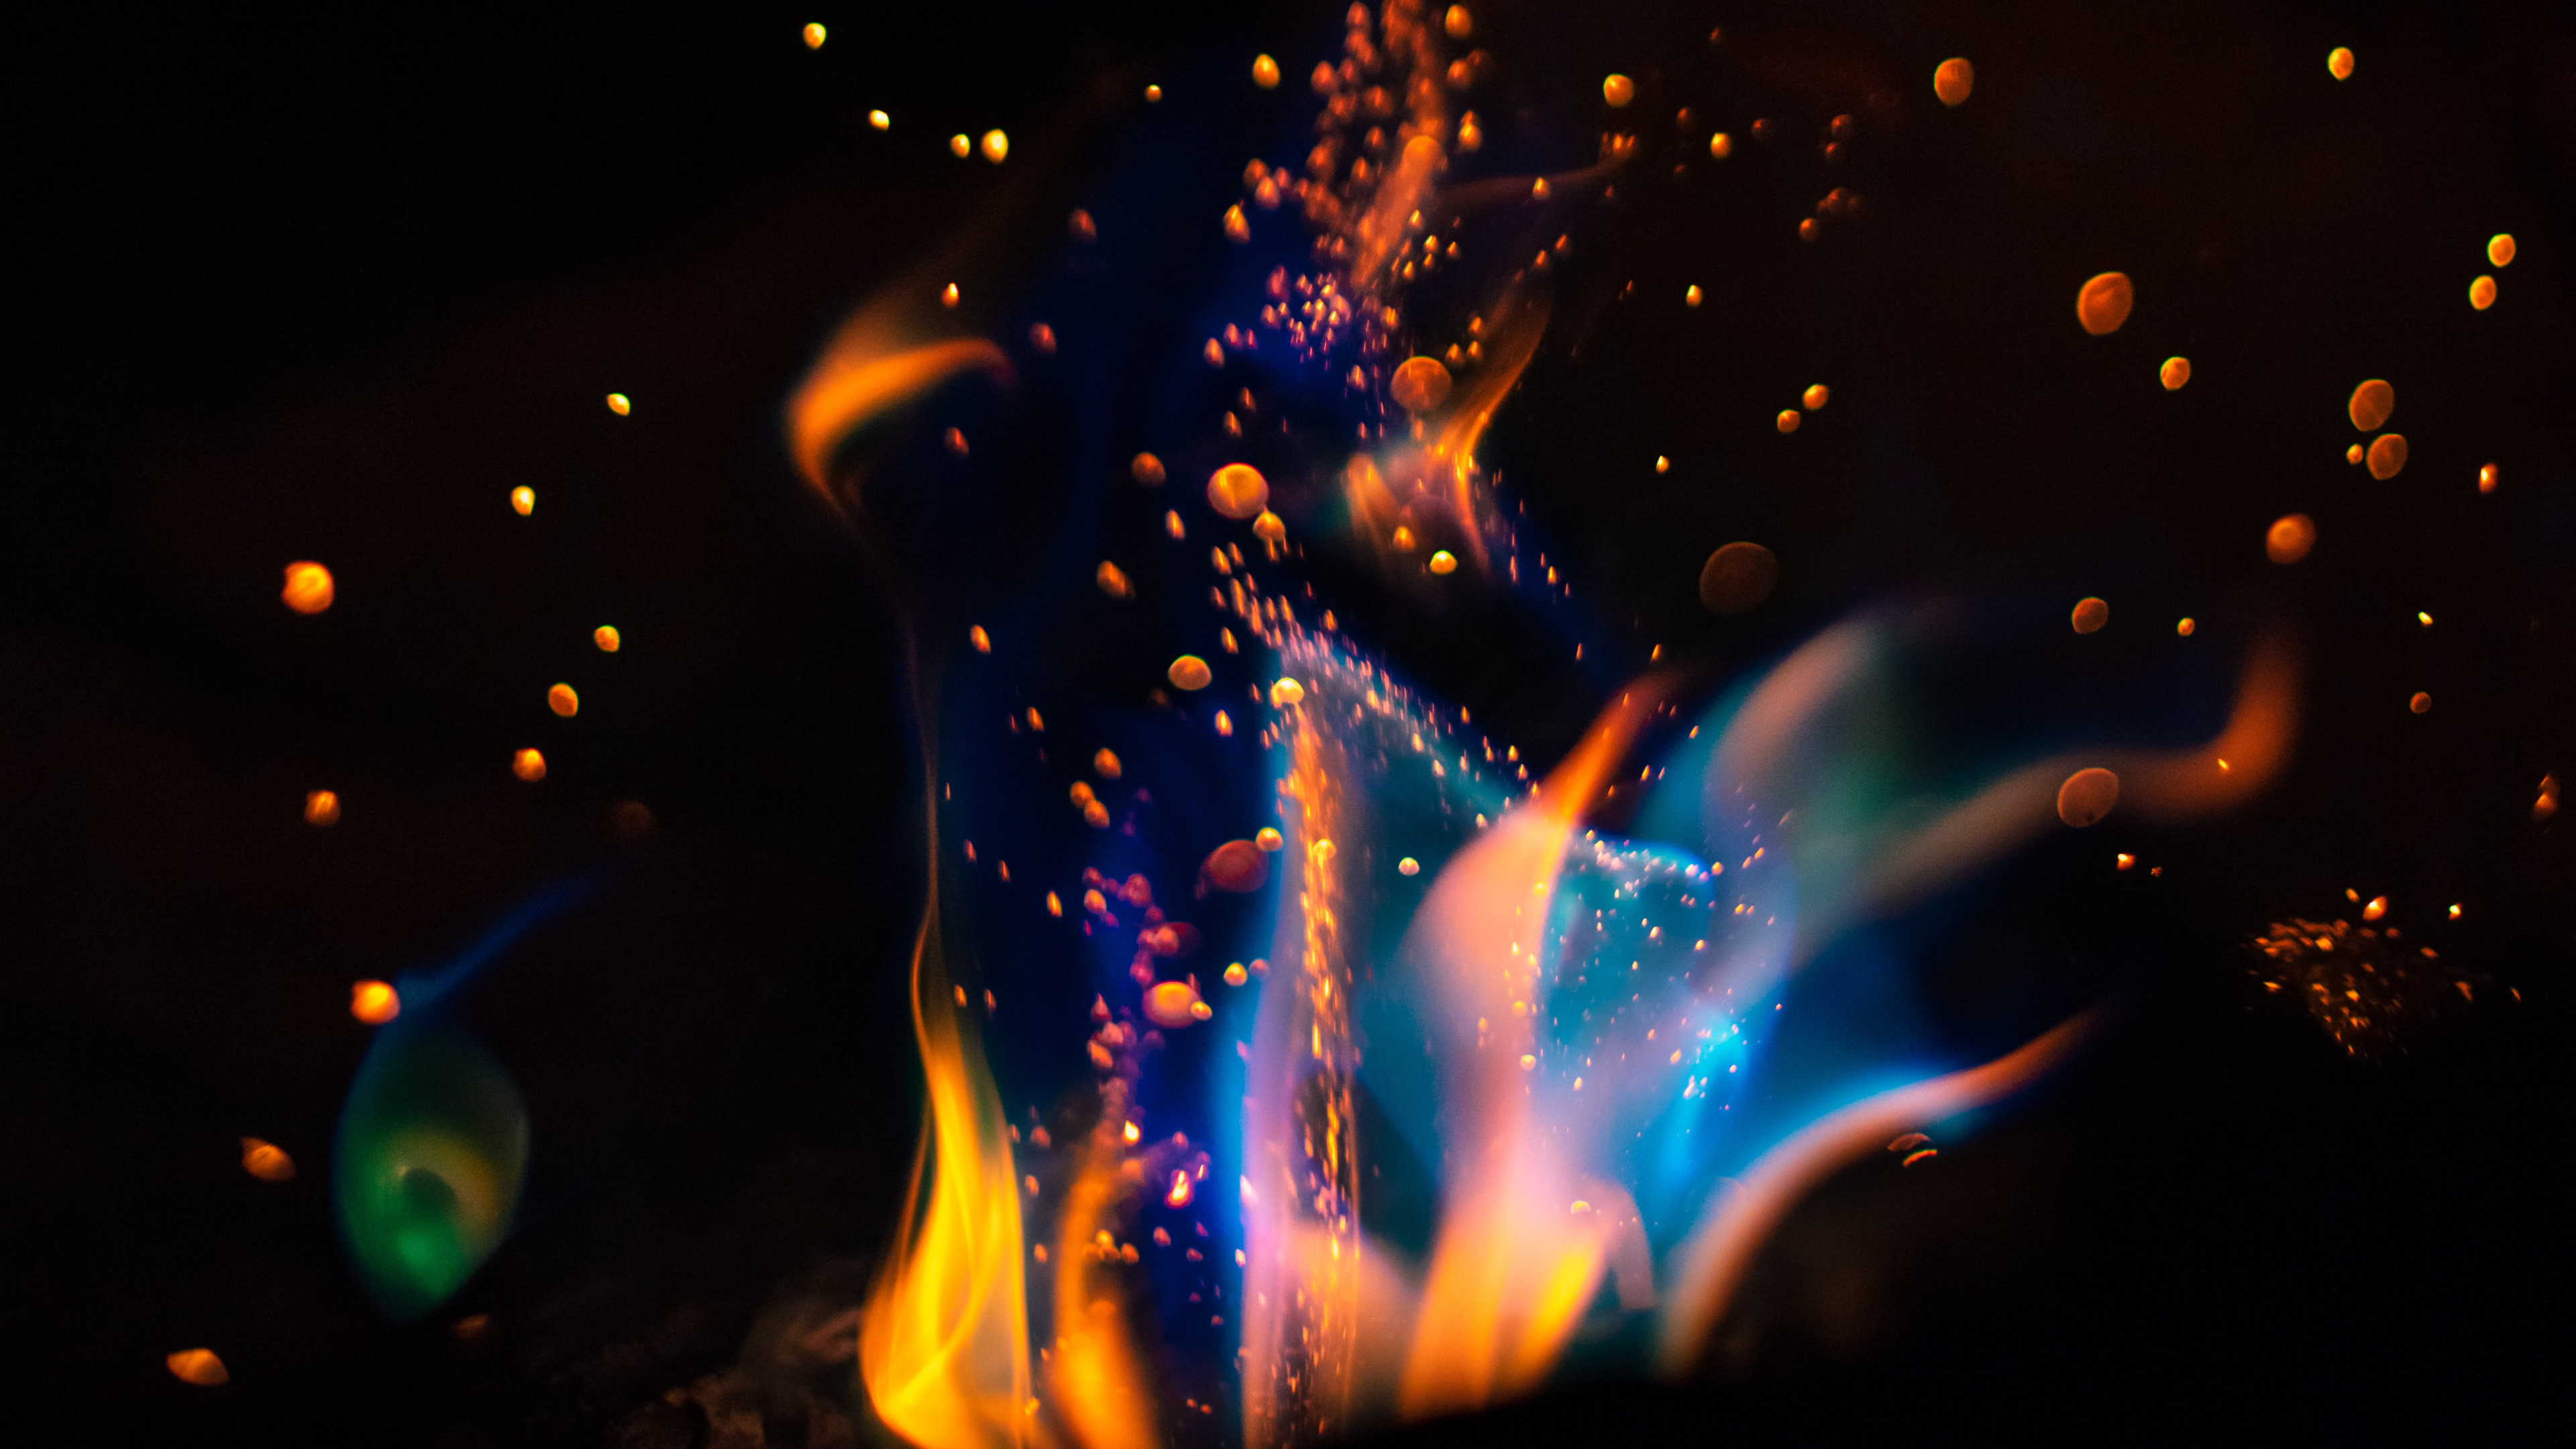 Hot flames in darkness wallpaper 3840x2160